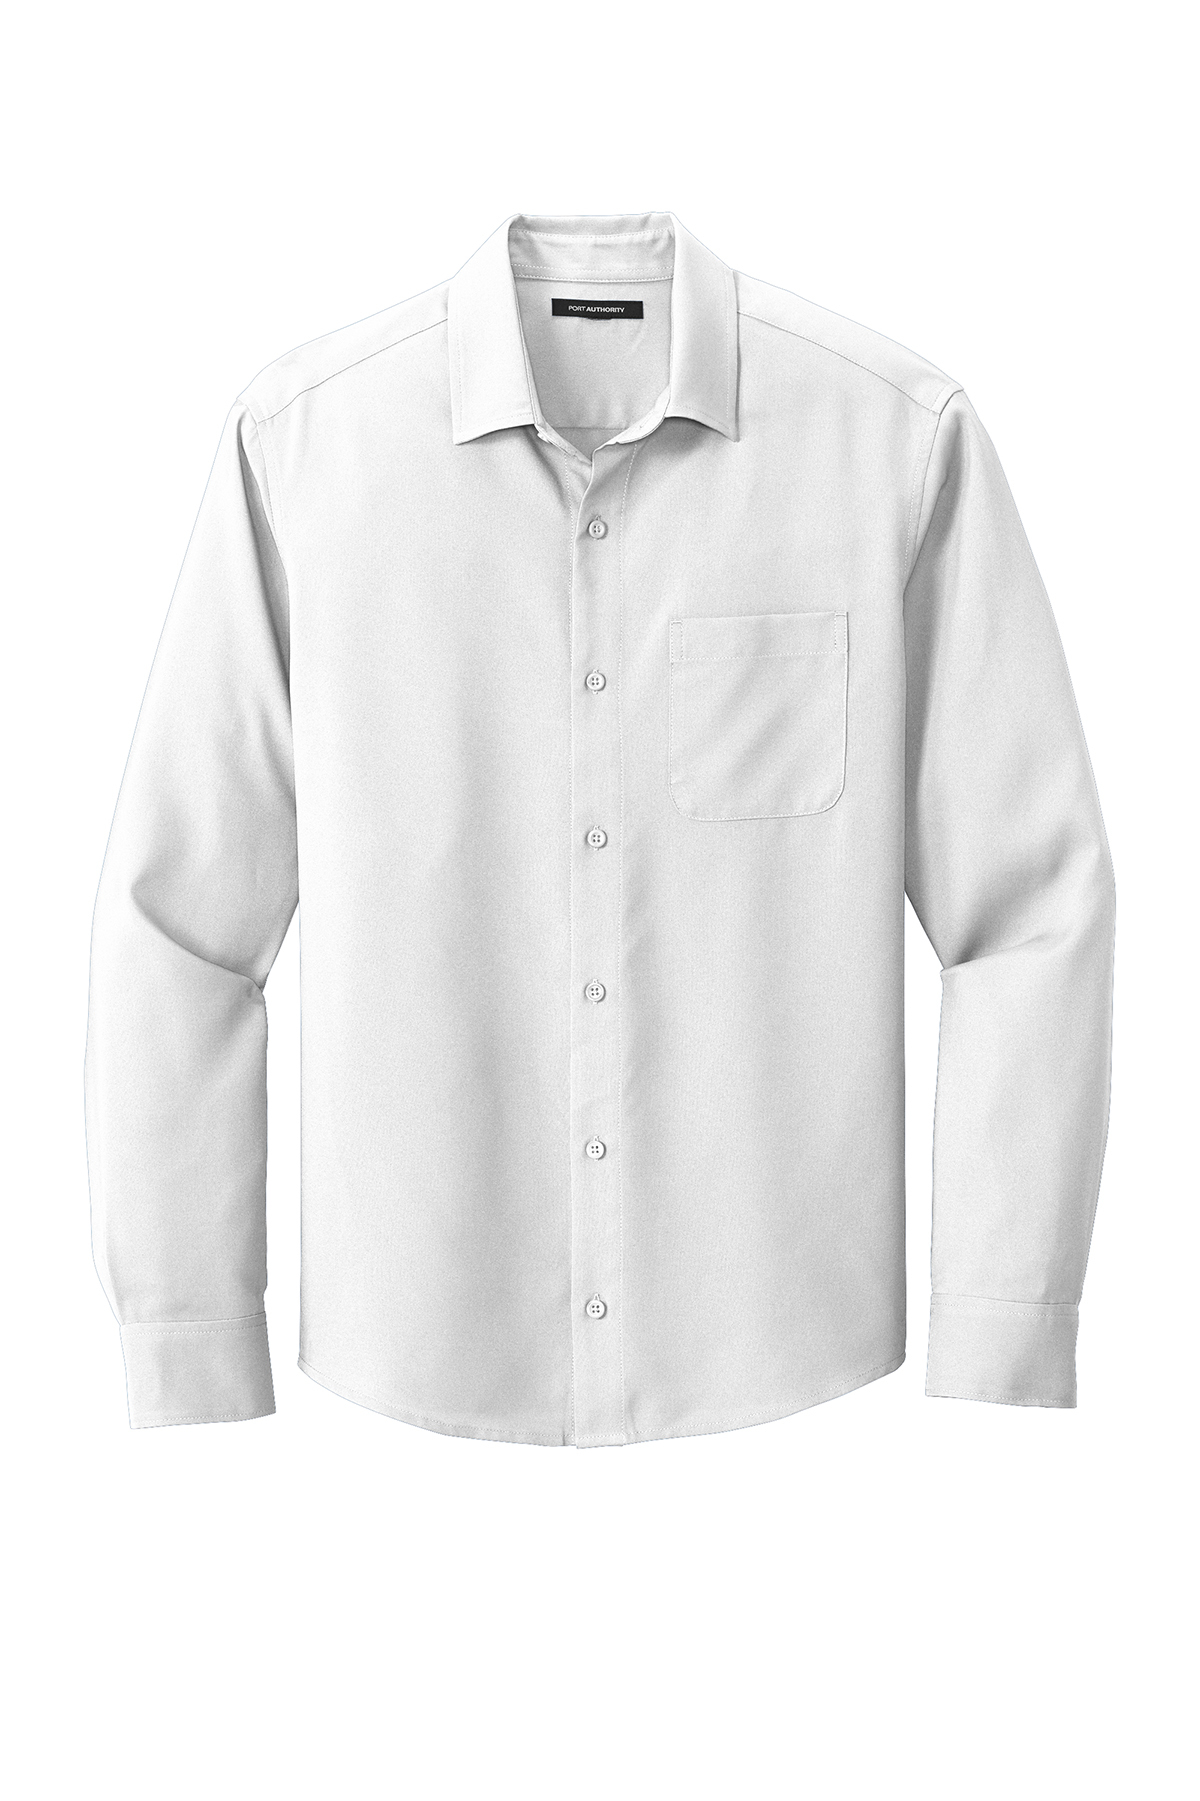 Port Authority Long Sleeve Performance Staff Shirt | Product | Company ...